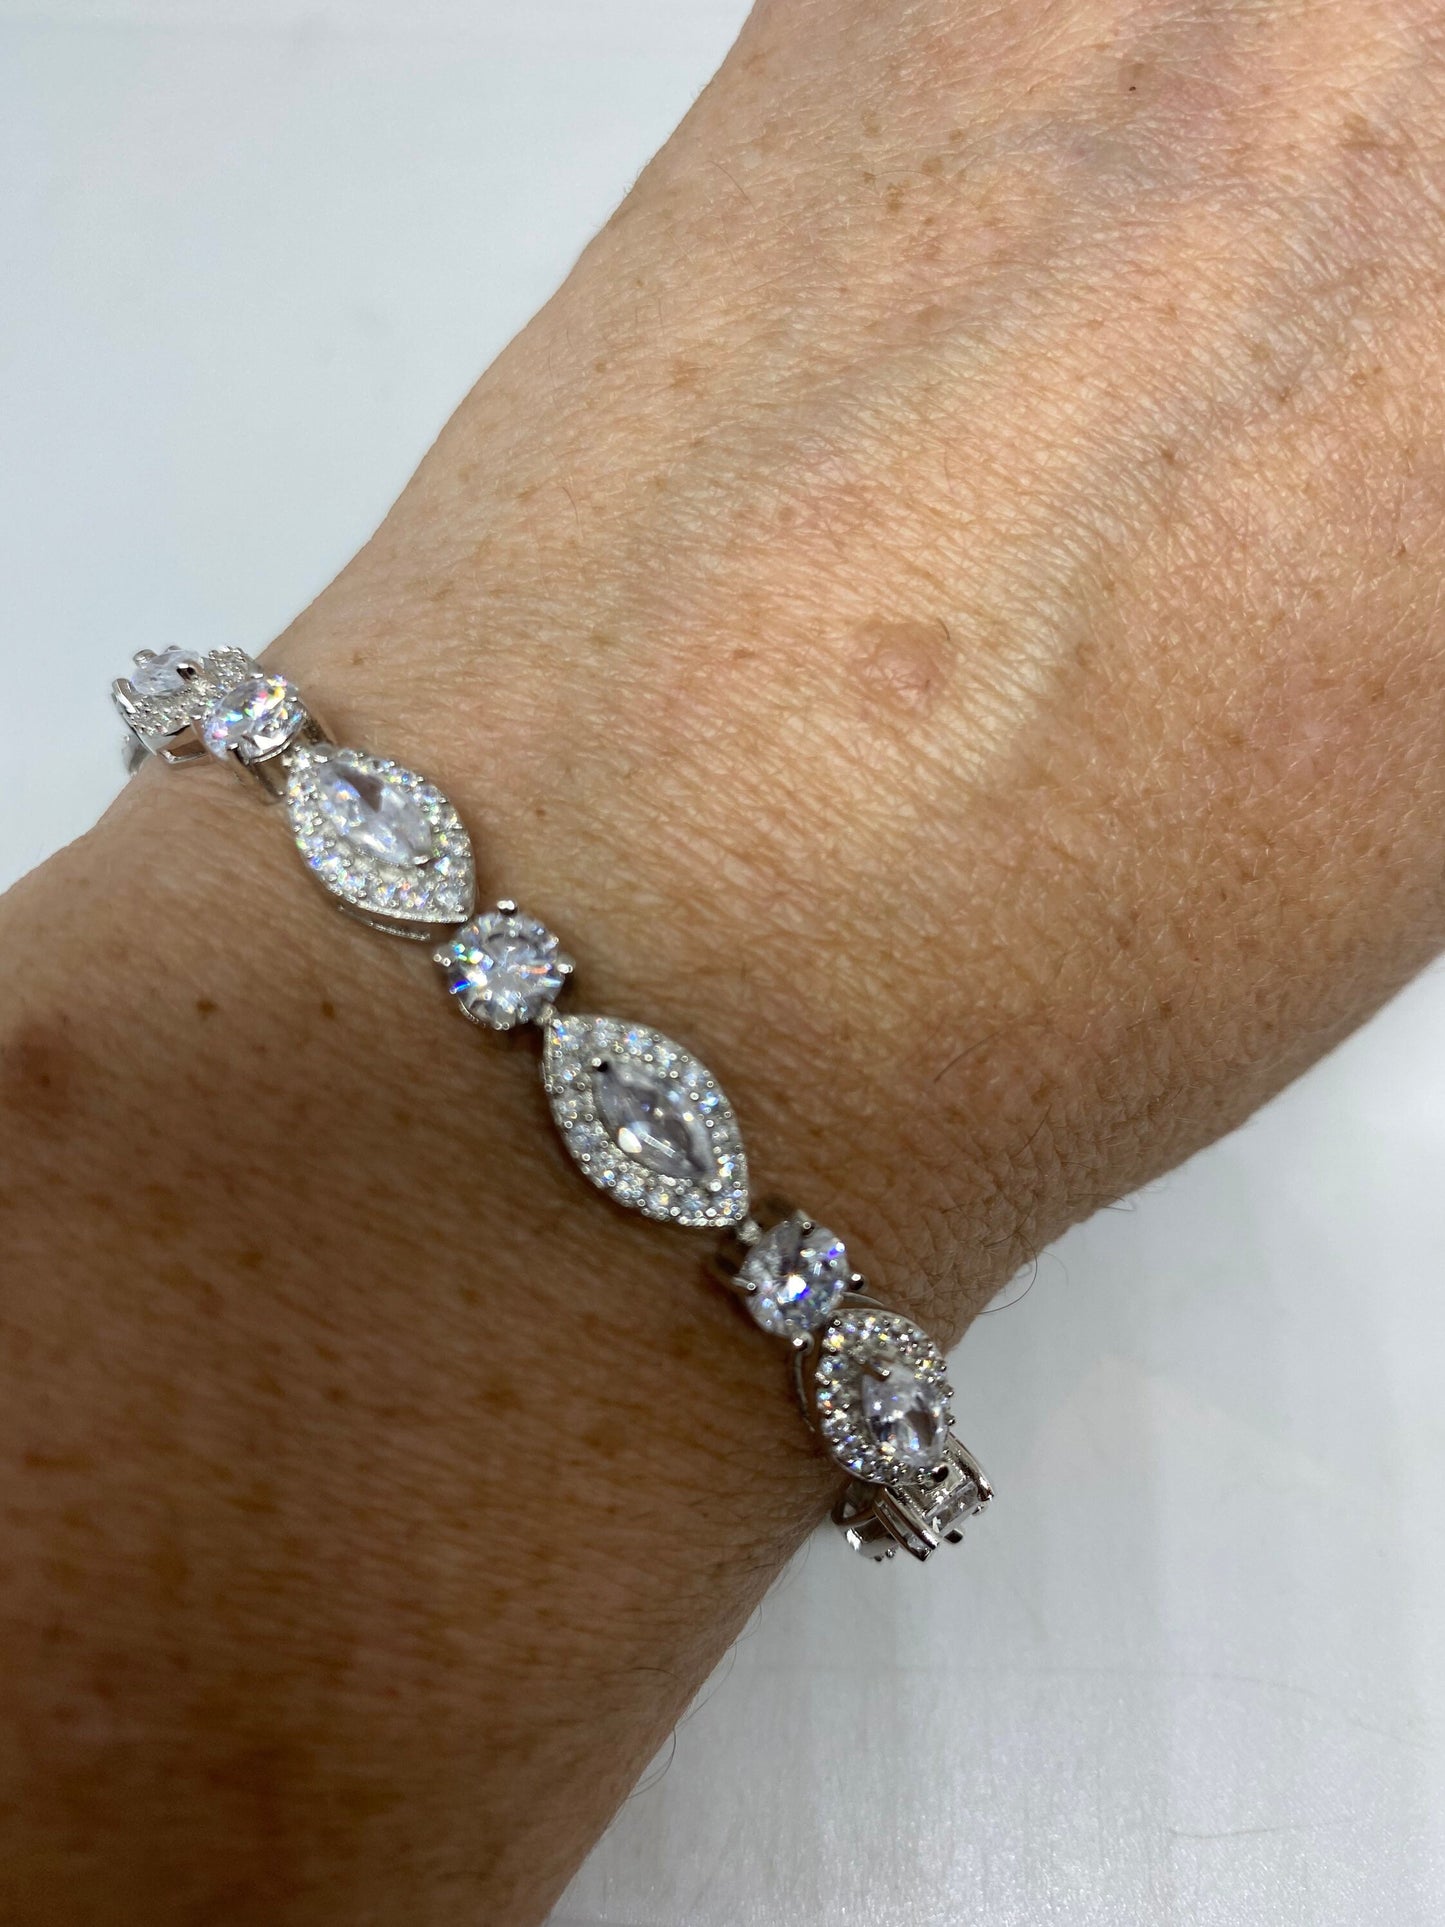 Handmade Genuine white Crystal Rhodium Finished 925 Sterling Silver Tennis Bracelet